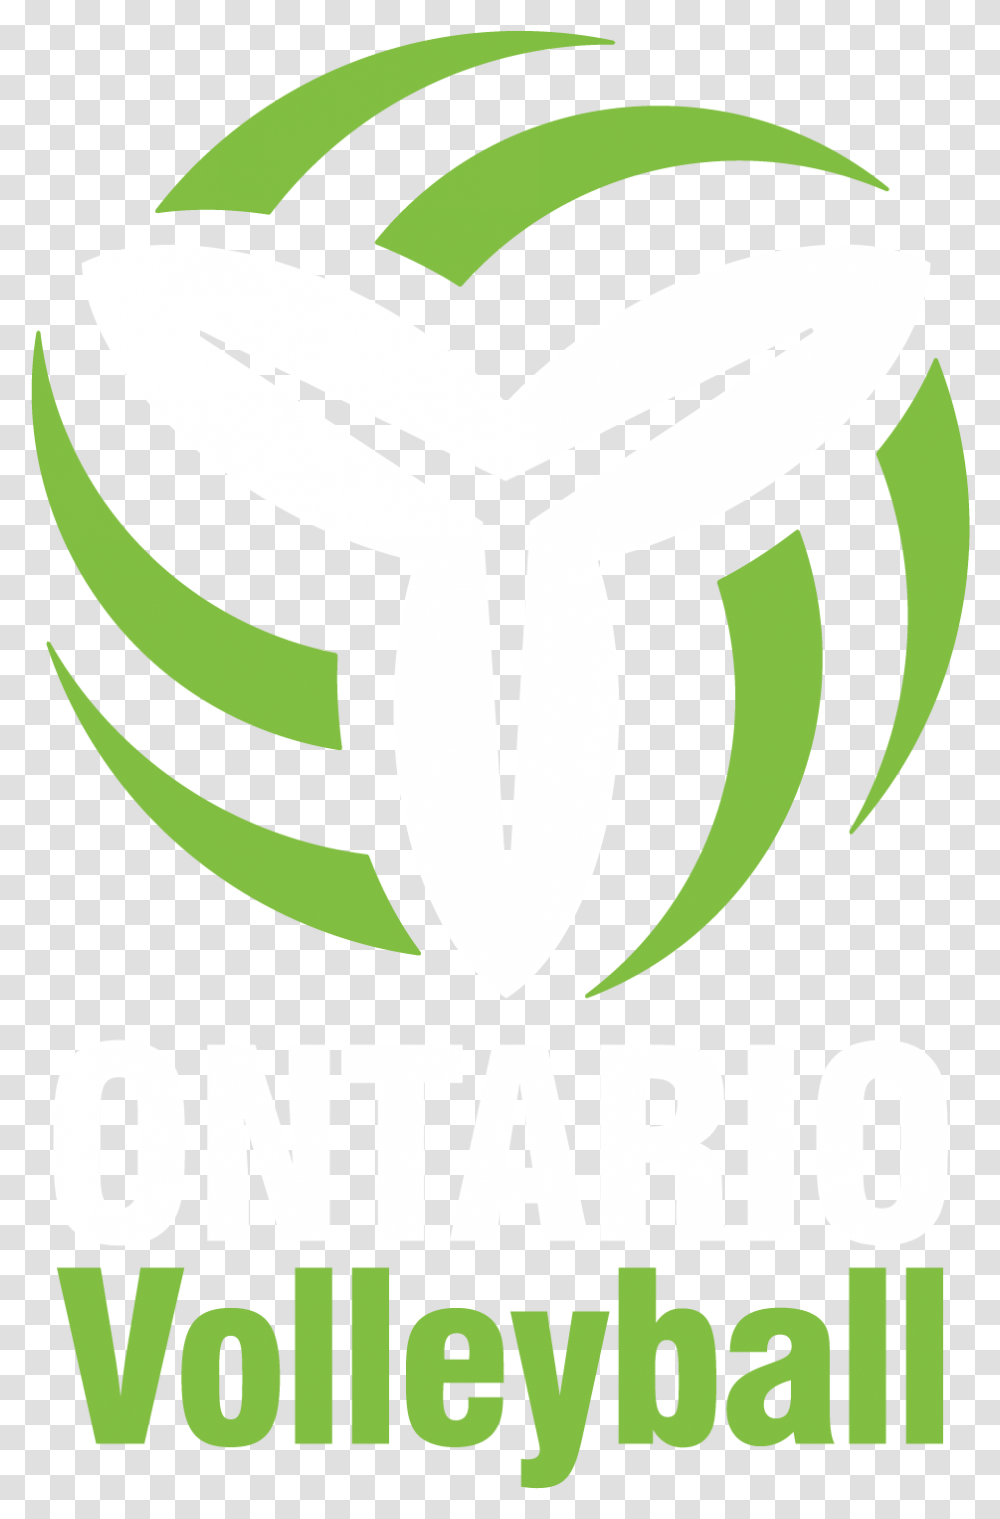 Ontario Volleyball Association Ontario Volleyball Association, Symbol, Logo, Trademark, Poster Transparent Png